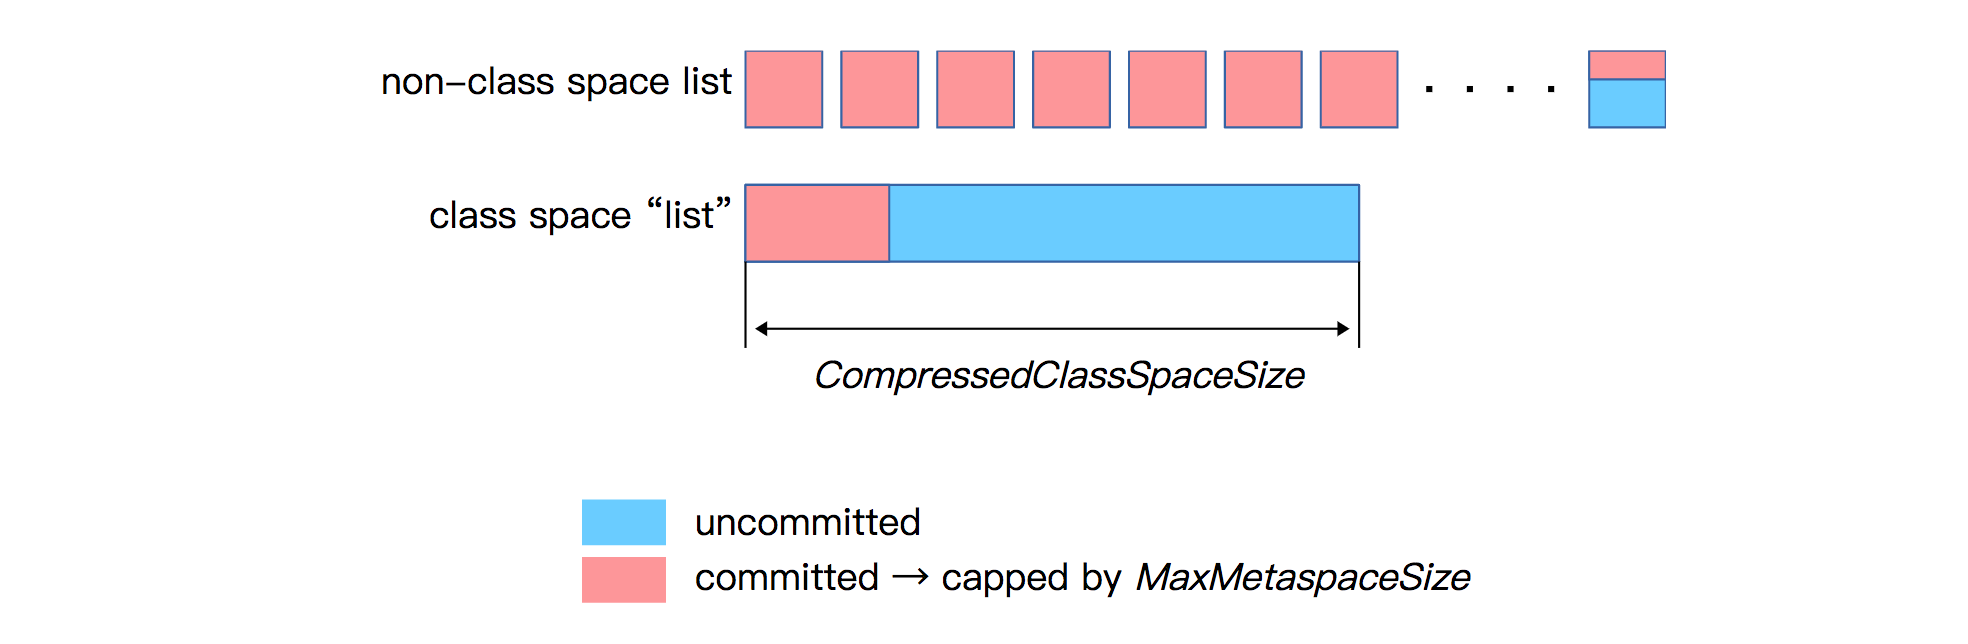 MaxMetaspaceSize and CompressedClassSpaceSize